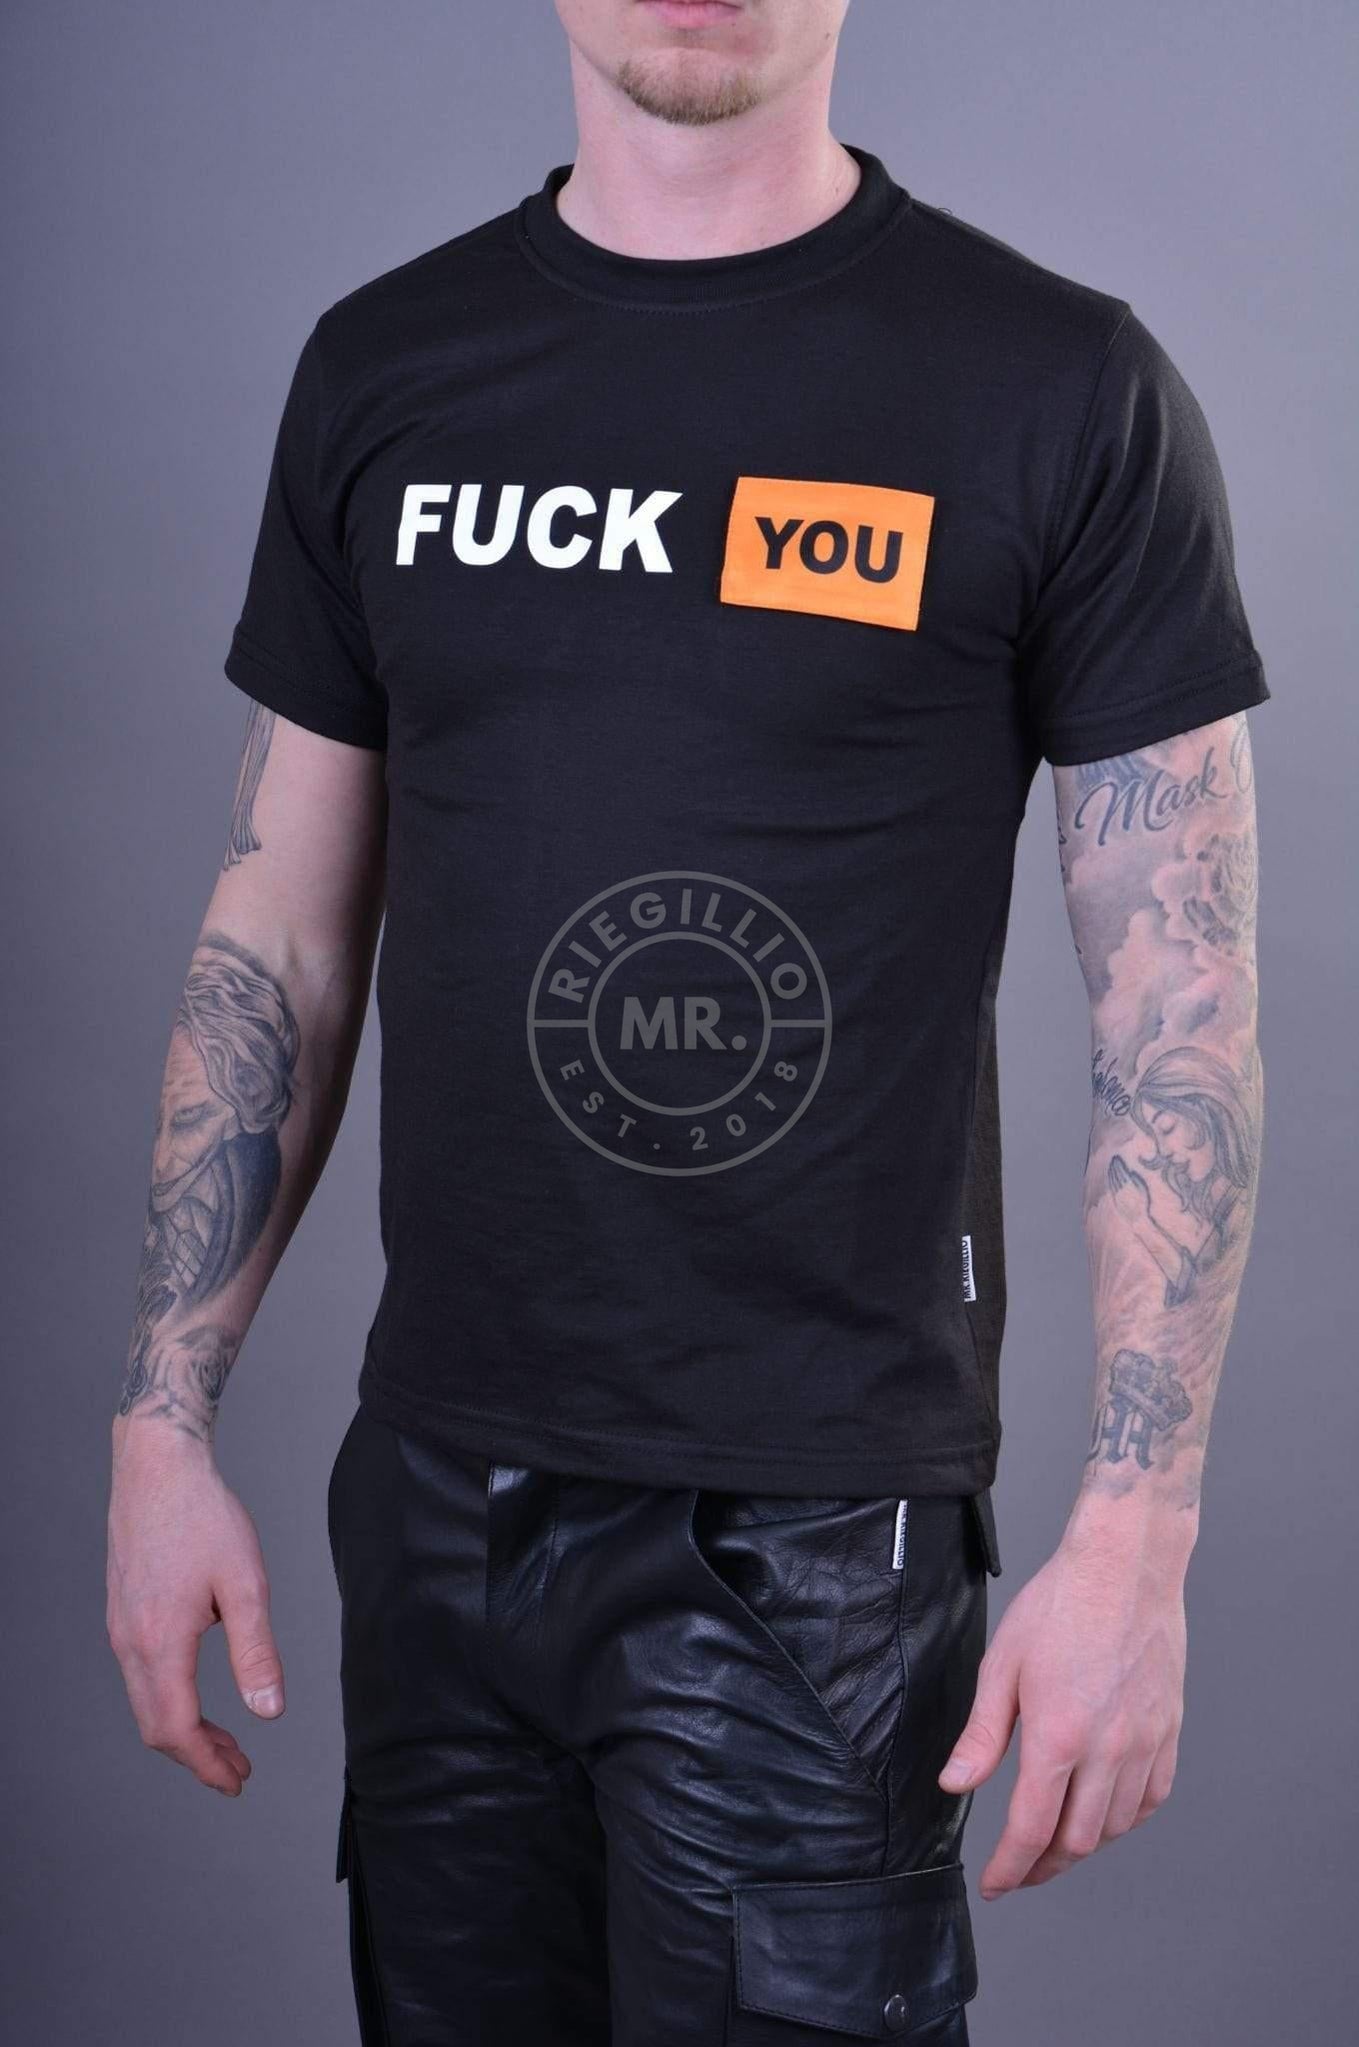 Fuck ME/YOU T-Shirt-at MR. Riegillio